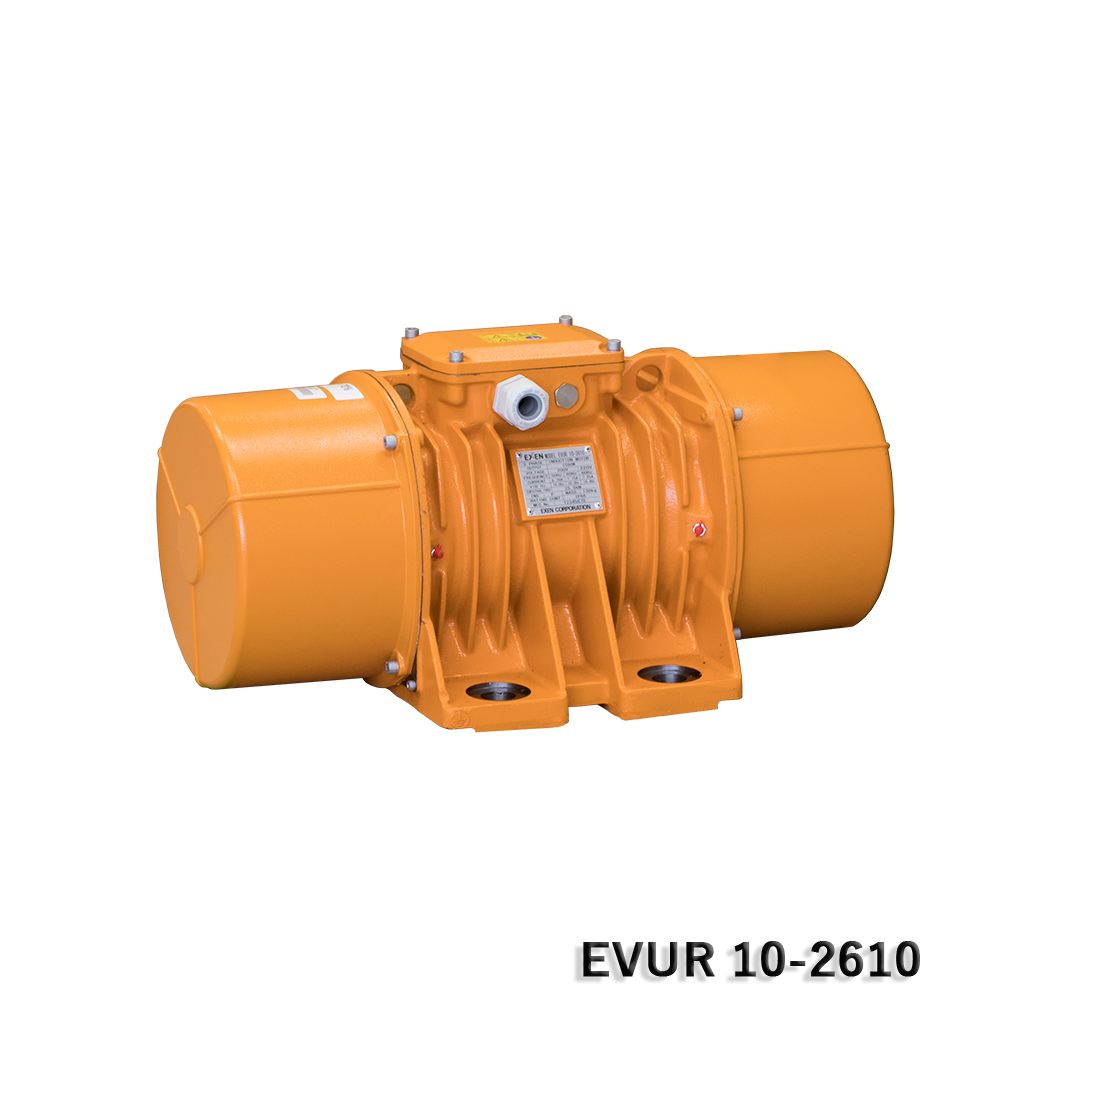 Vibration motor EVSI ･ EVUR 10 series (6-pole 3-phase 200 - 440V)